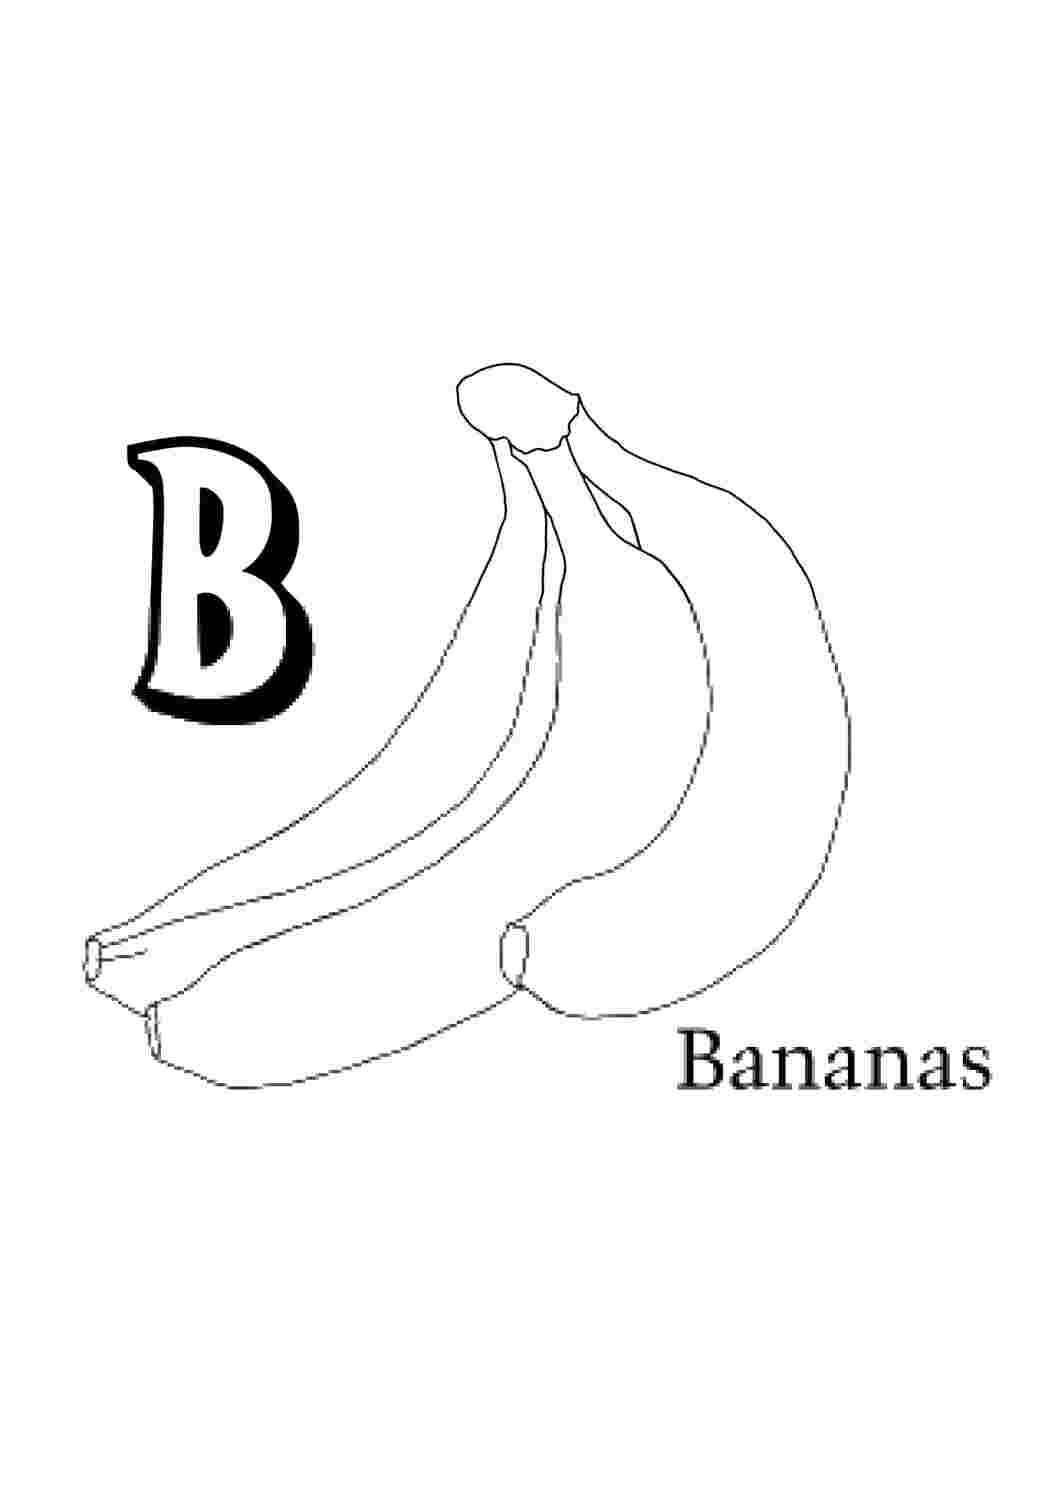 Bananas picture for Kids для раскраски